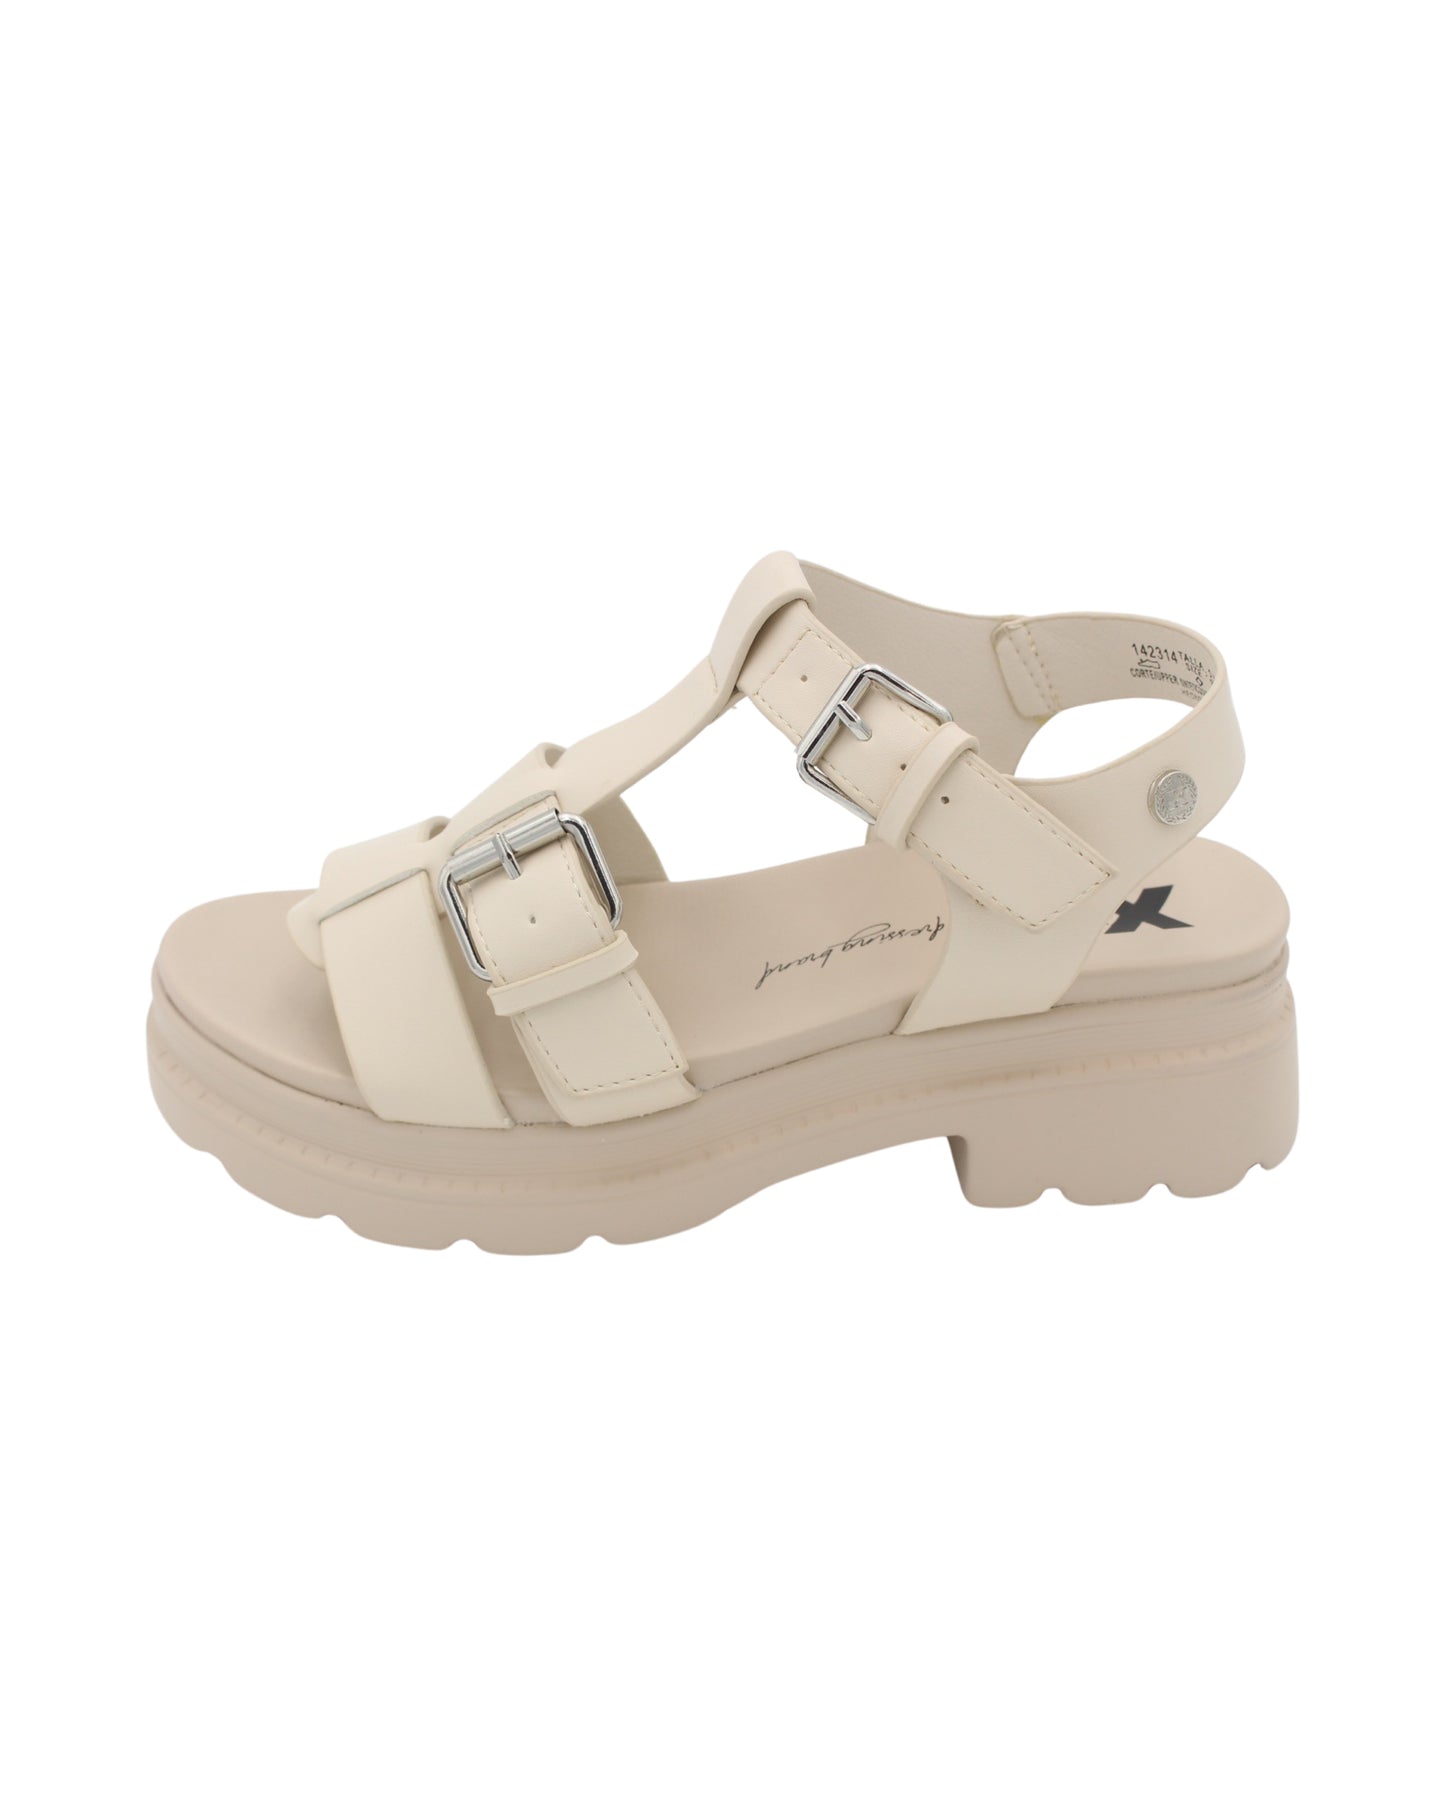 Xti - Ladies Shoes Sandals Ice (2073)